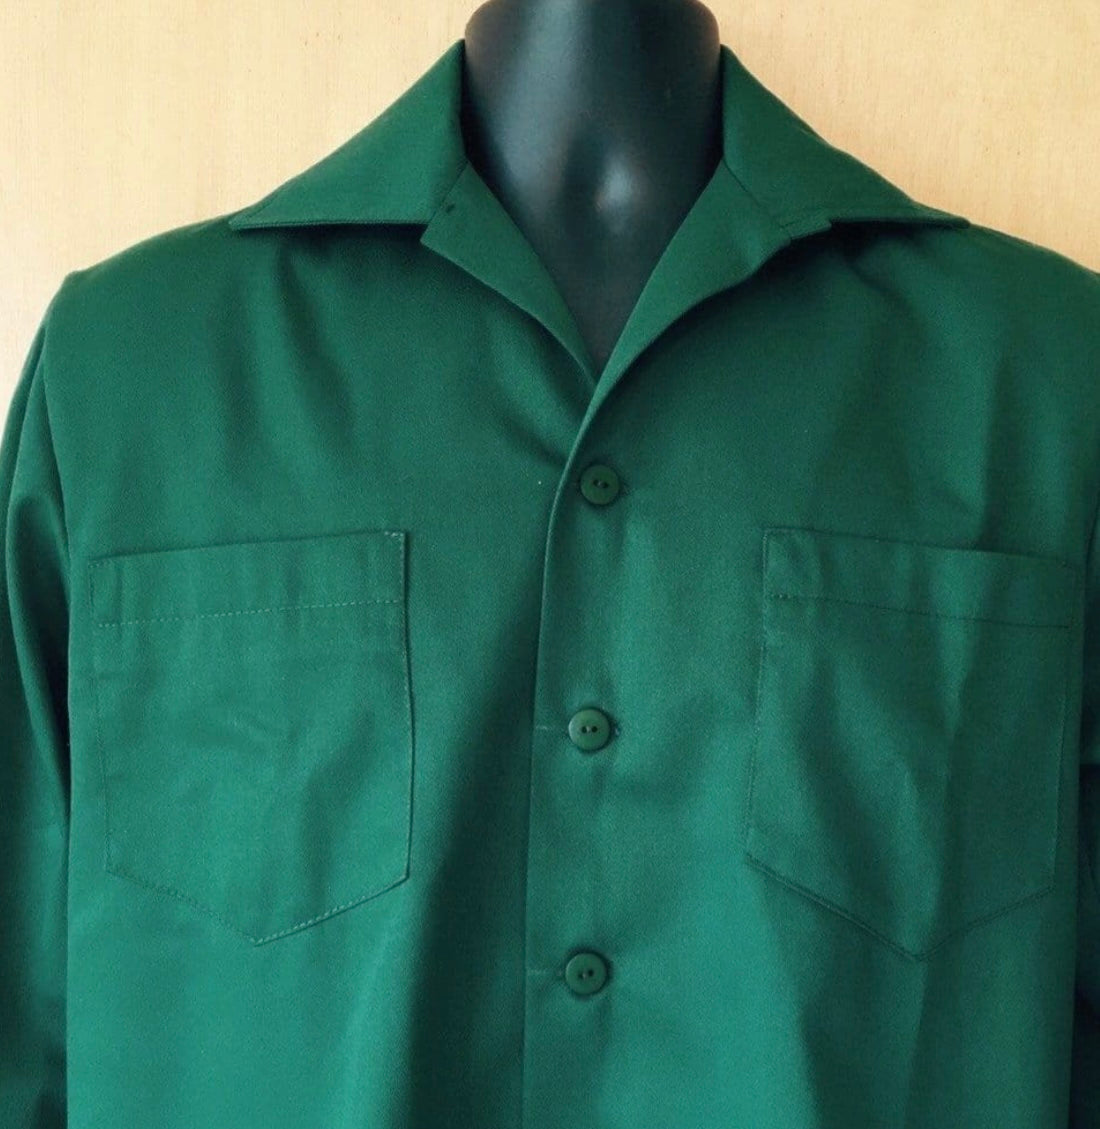 Vintage 1950s forest green gabardine shirt